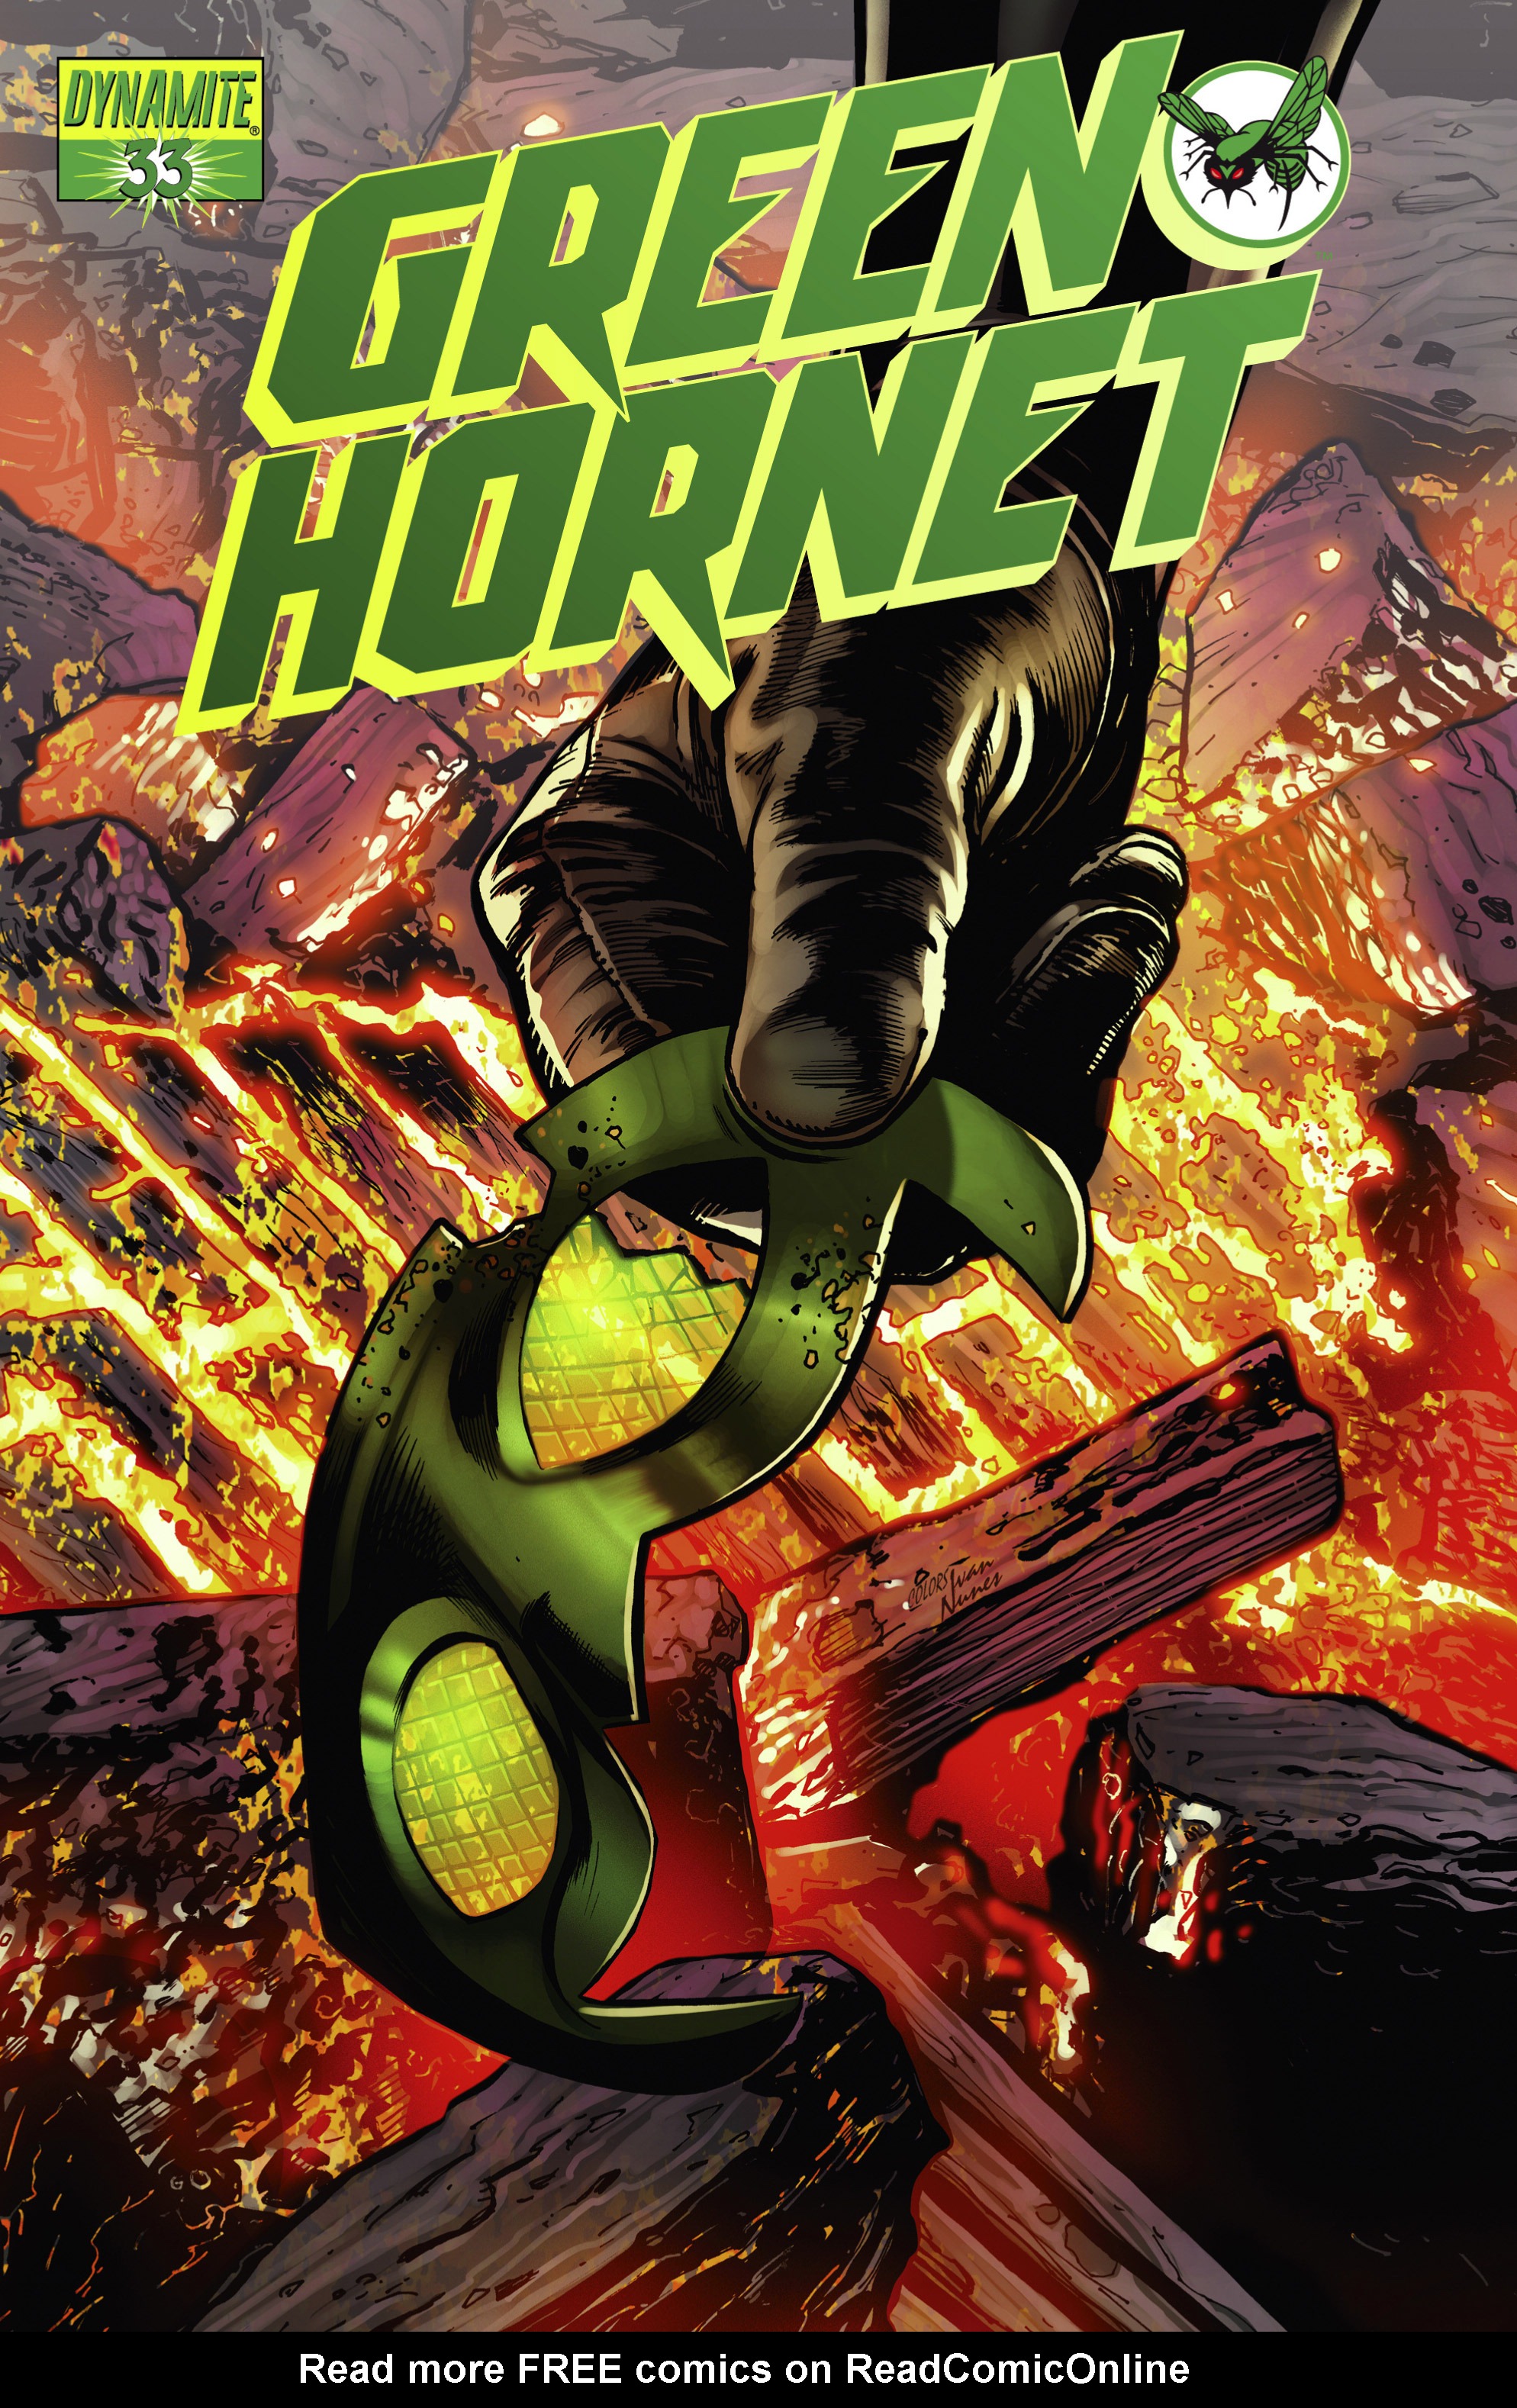 Read online Green Hornet comic -  Issue #33 - 2